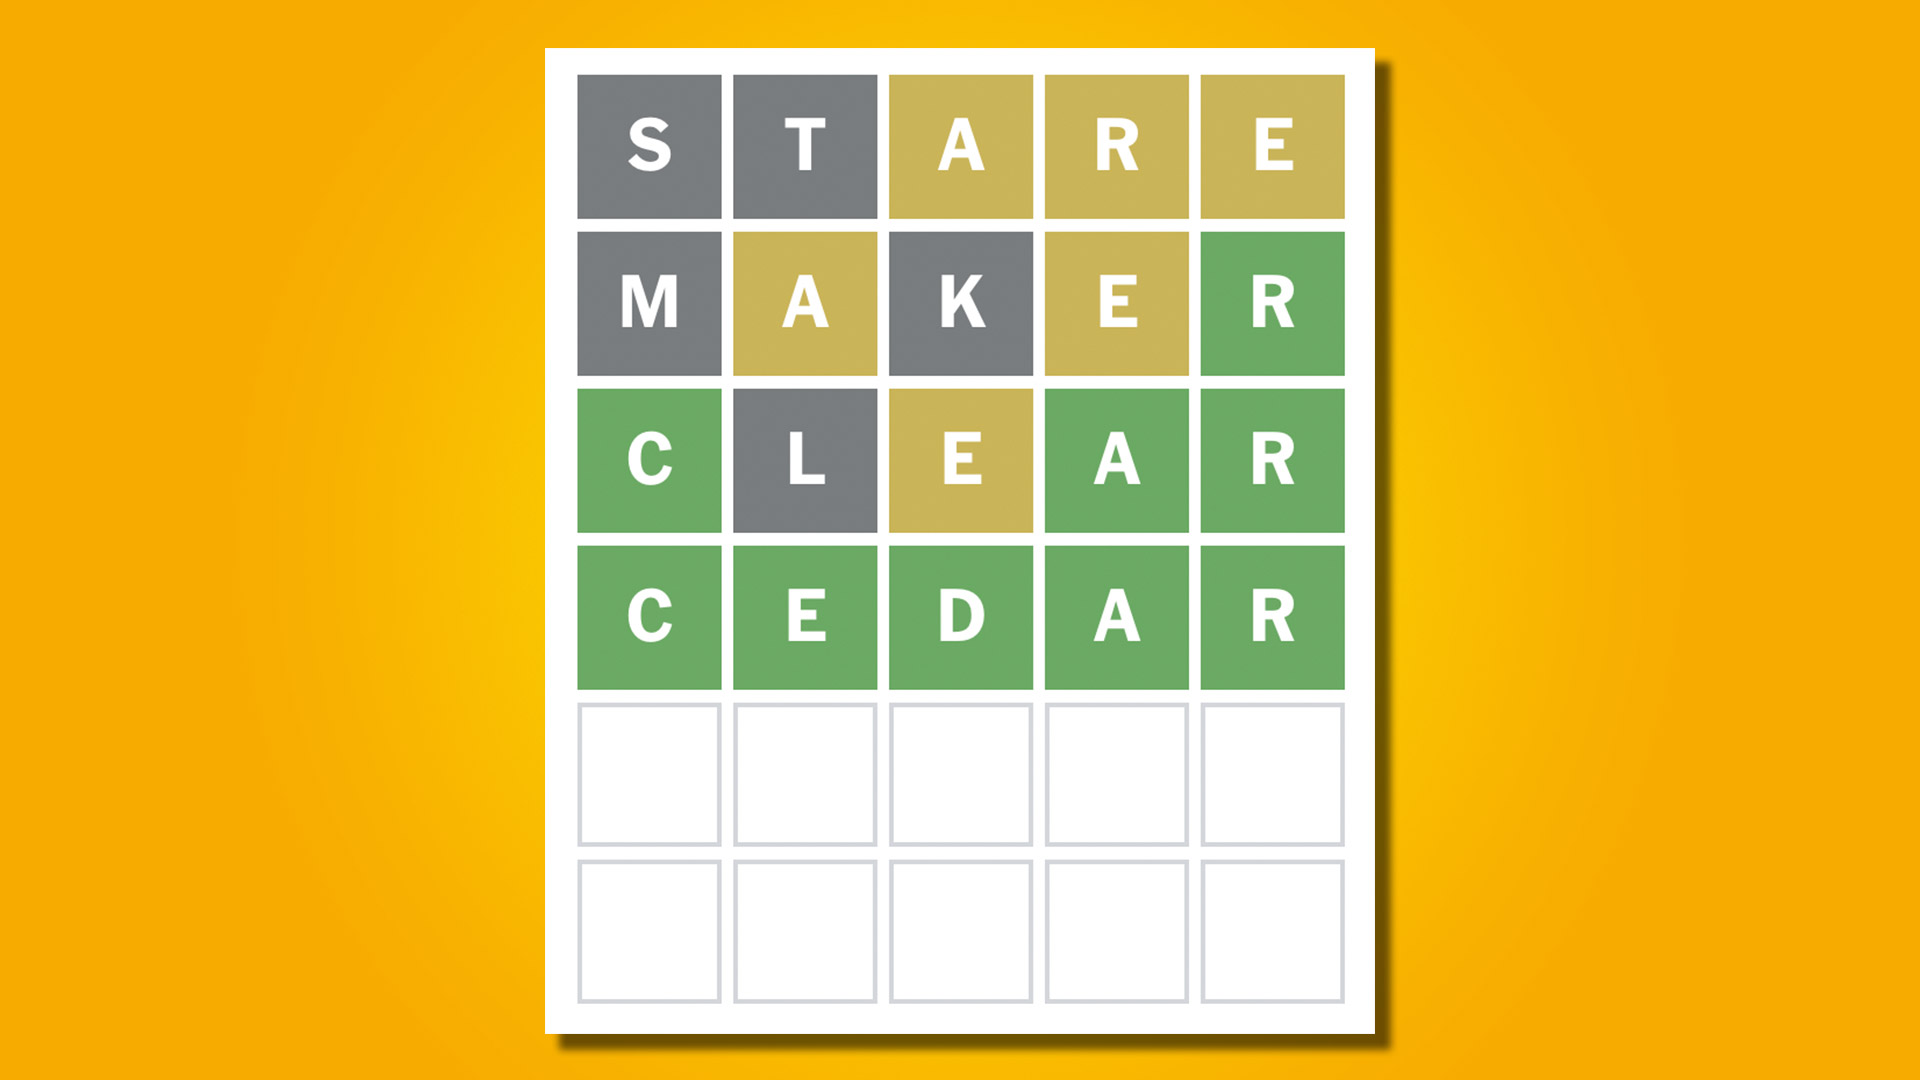 Wordle answer 679 on yellow background